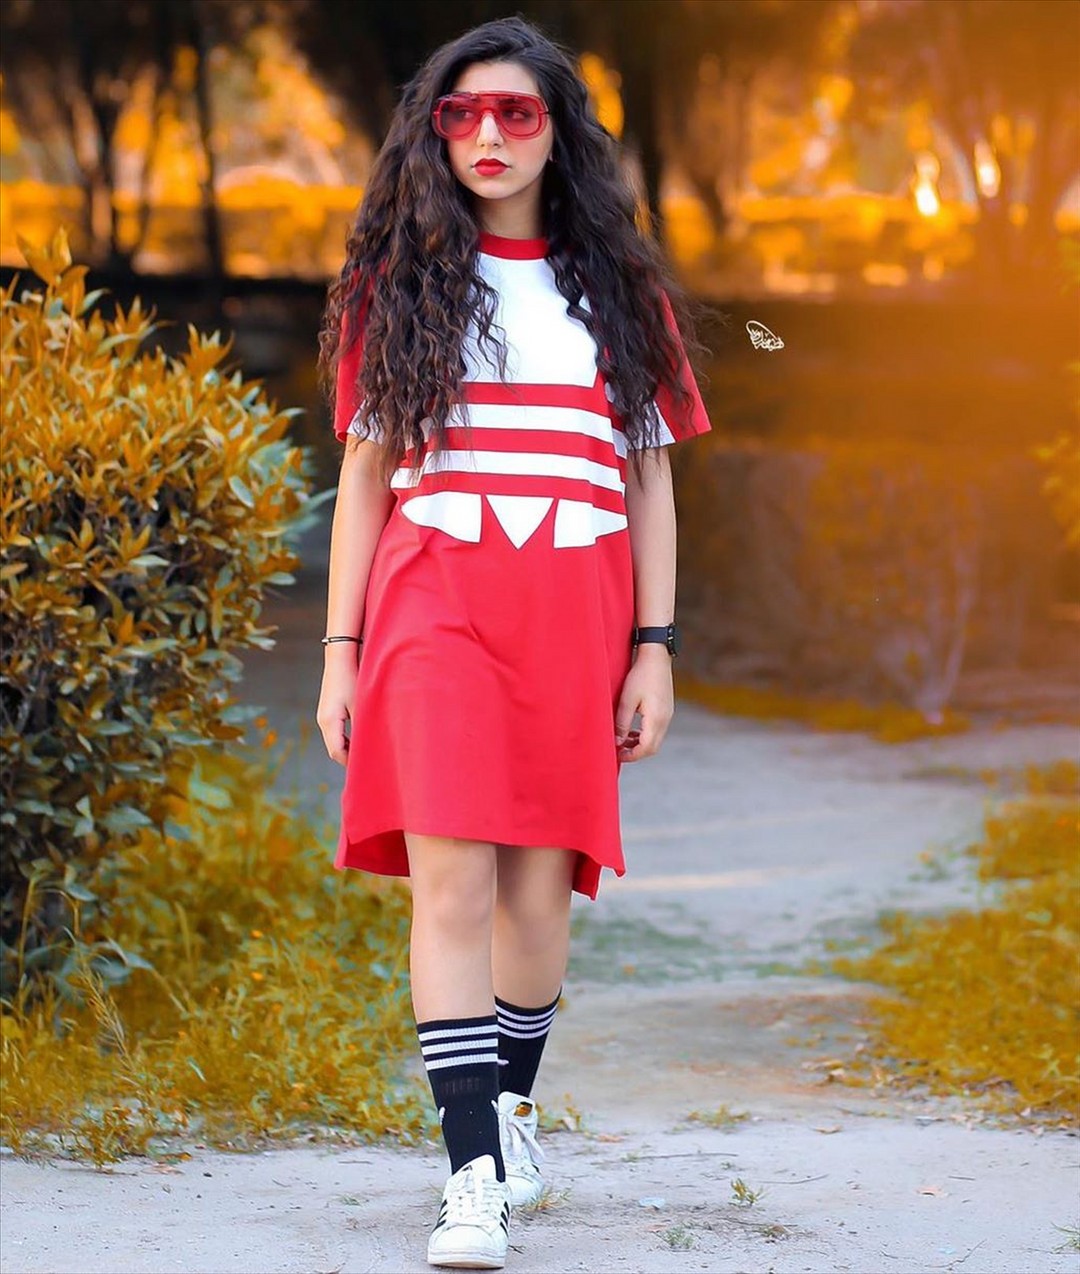 Ghrour Safar Red Dress Teen Girl Photo 02